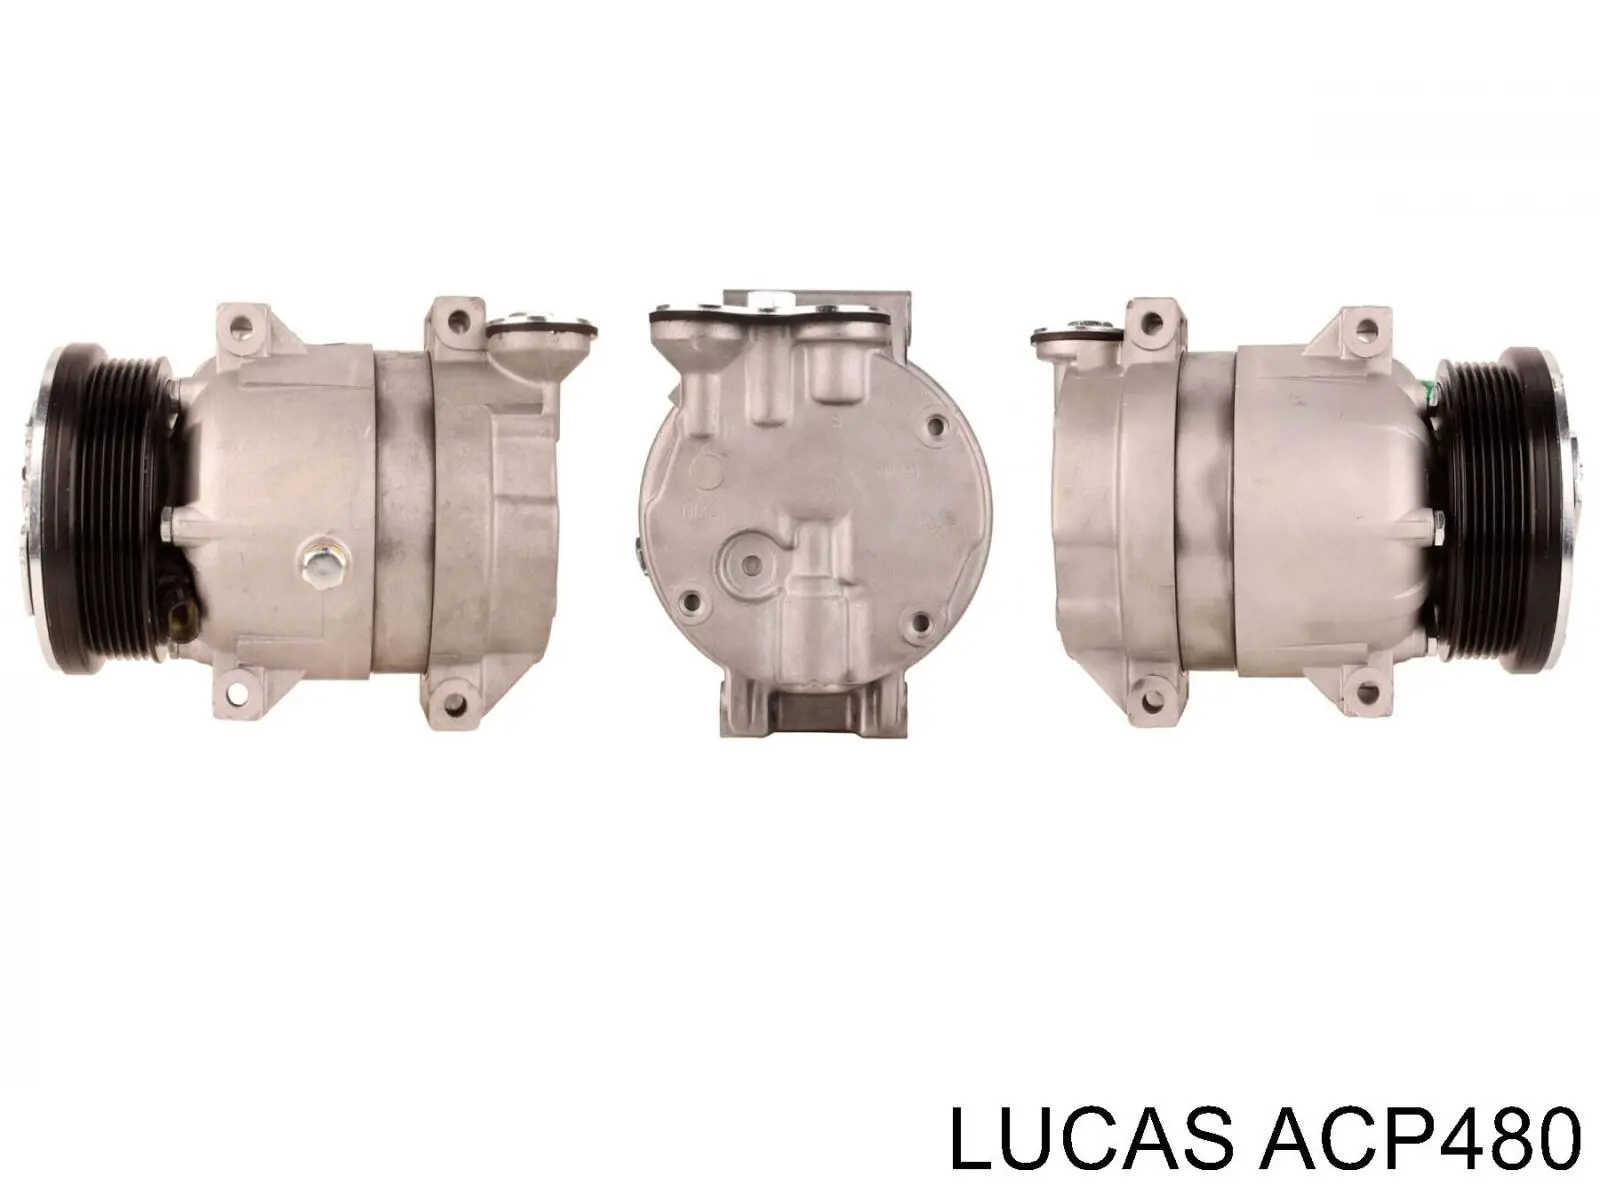 Compresor de aire acondicionado ACP480 Lucas